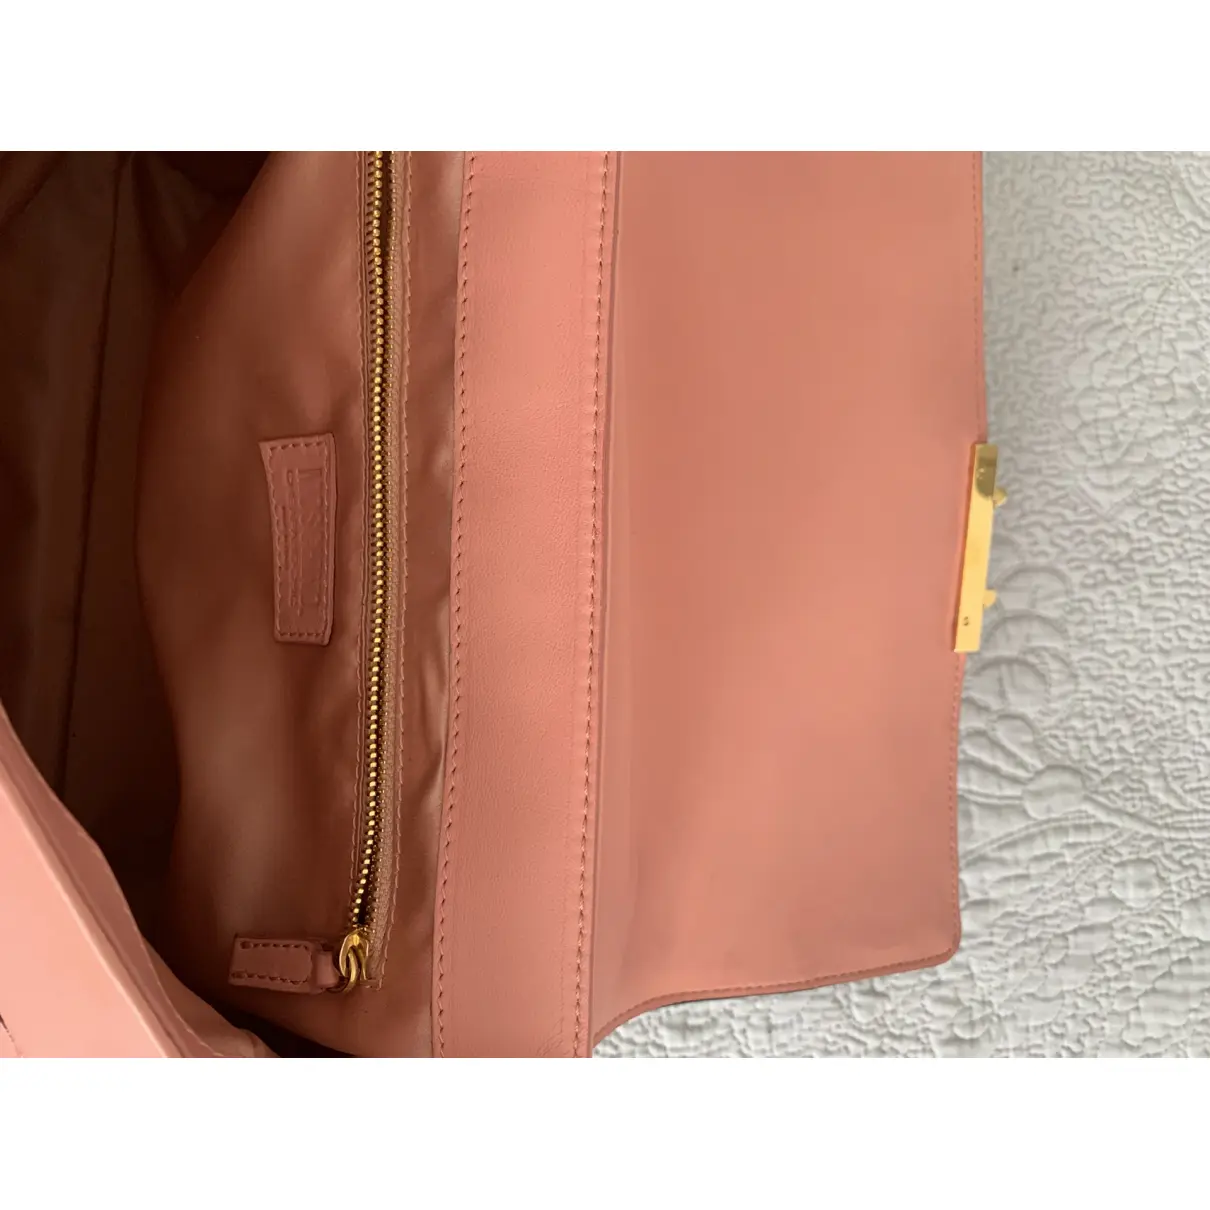 Leather handbag Moschino Cheap And Chic